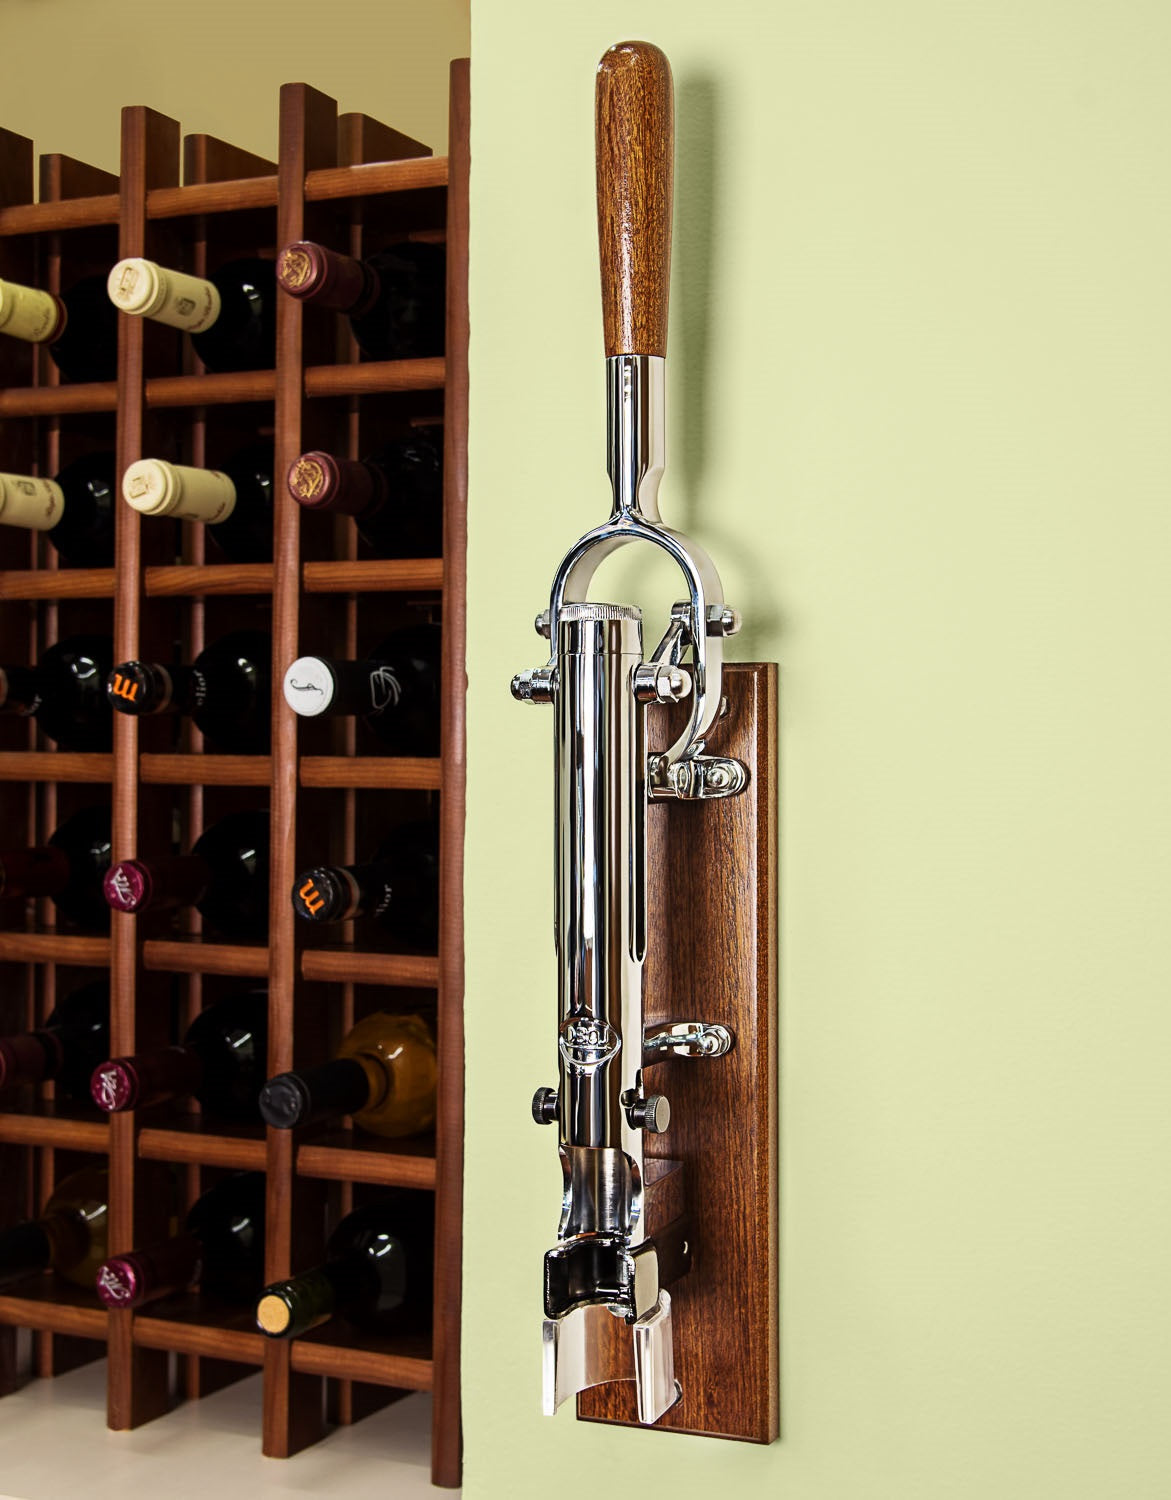 BOJ Professional Wine Opener Chrome Plated Wall Mounted Corkscrew